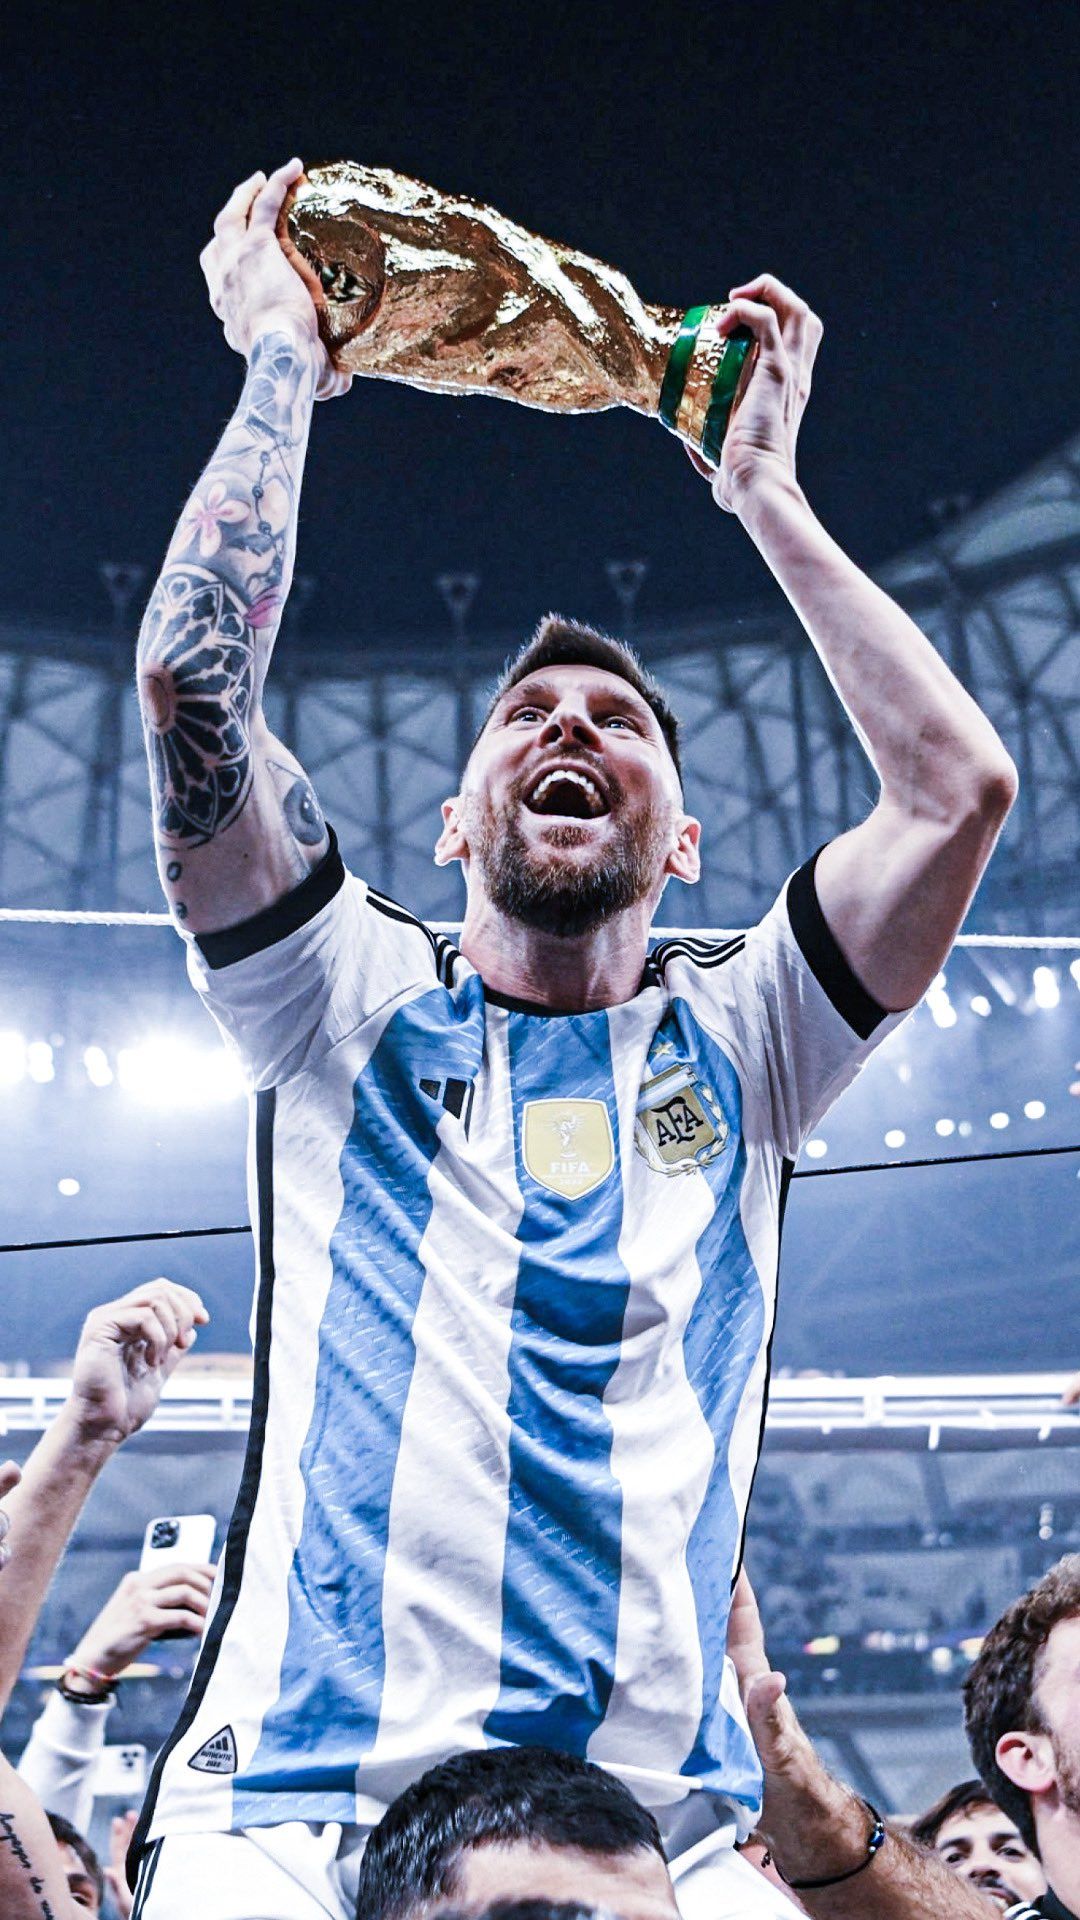 Fondos de pantalla de Messi Campeon del Mundo - FondosMil